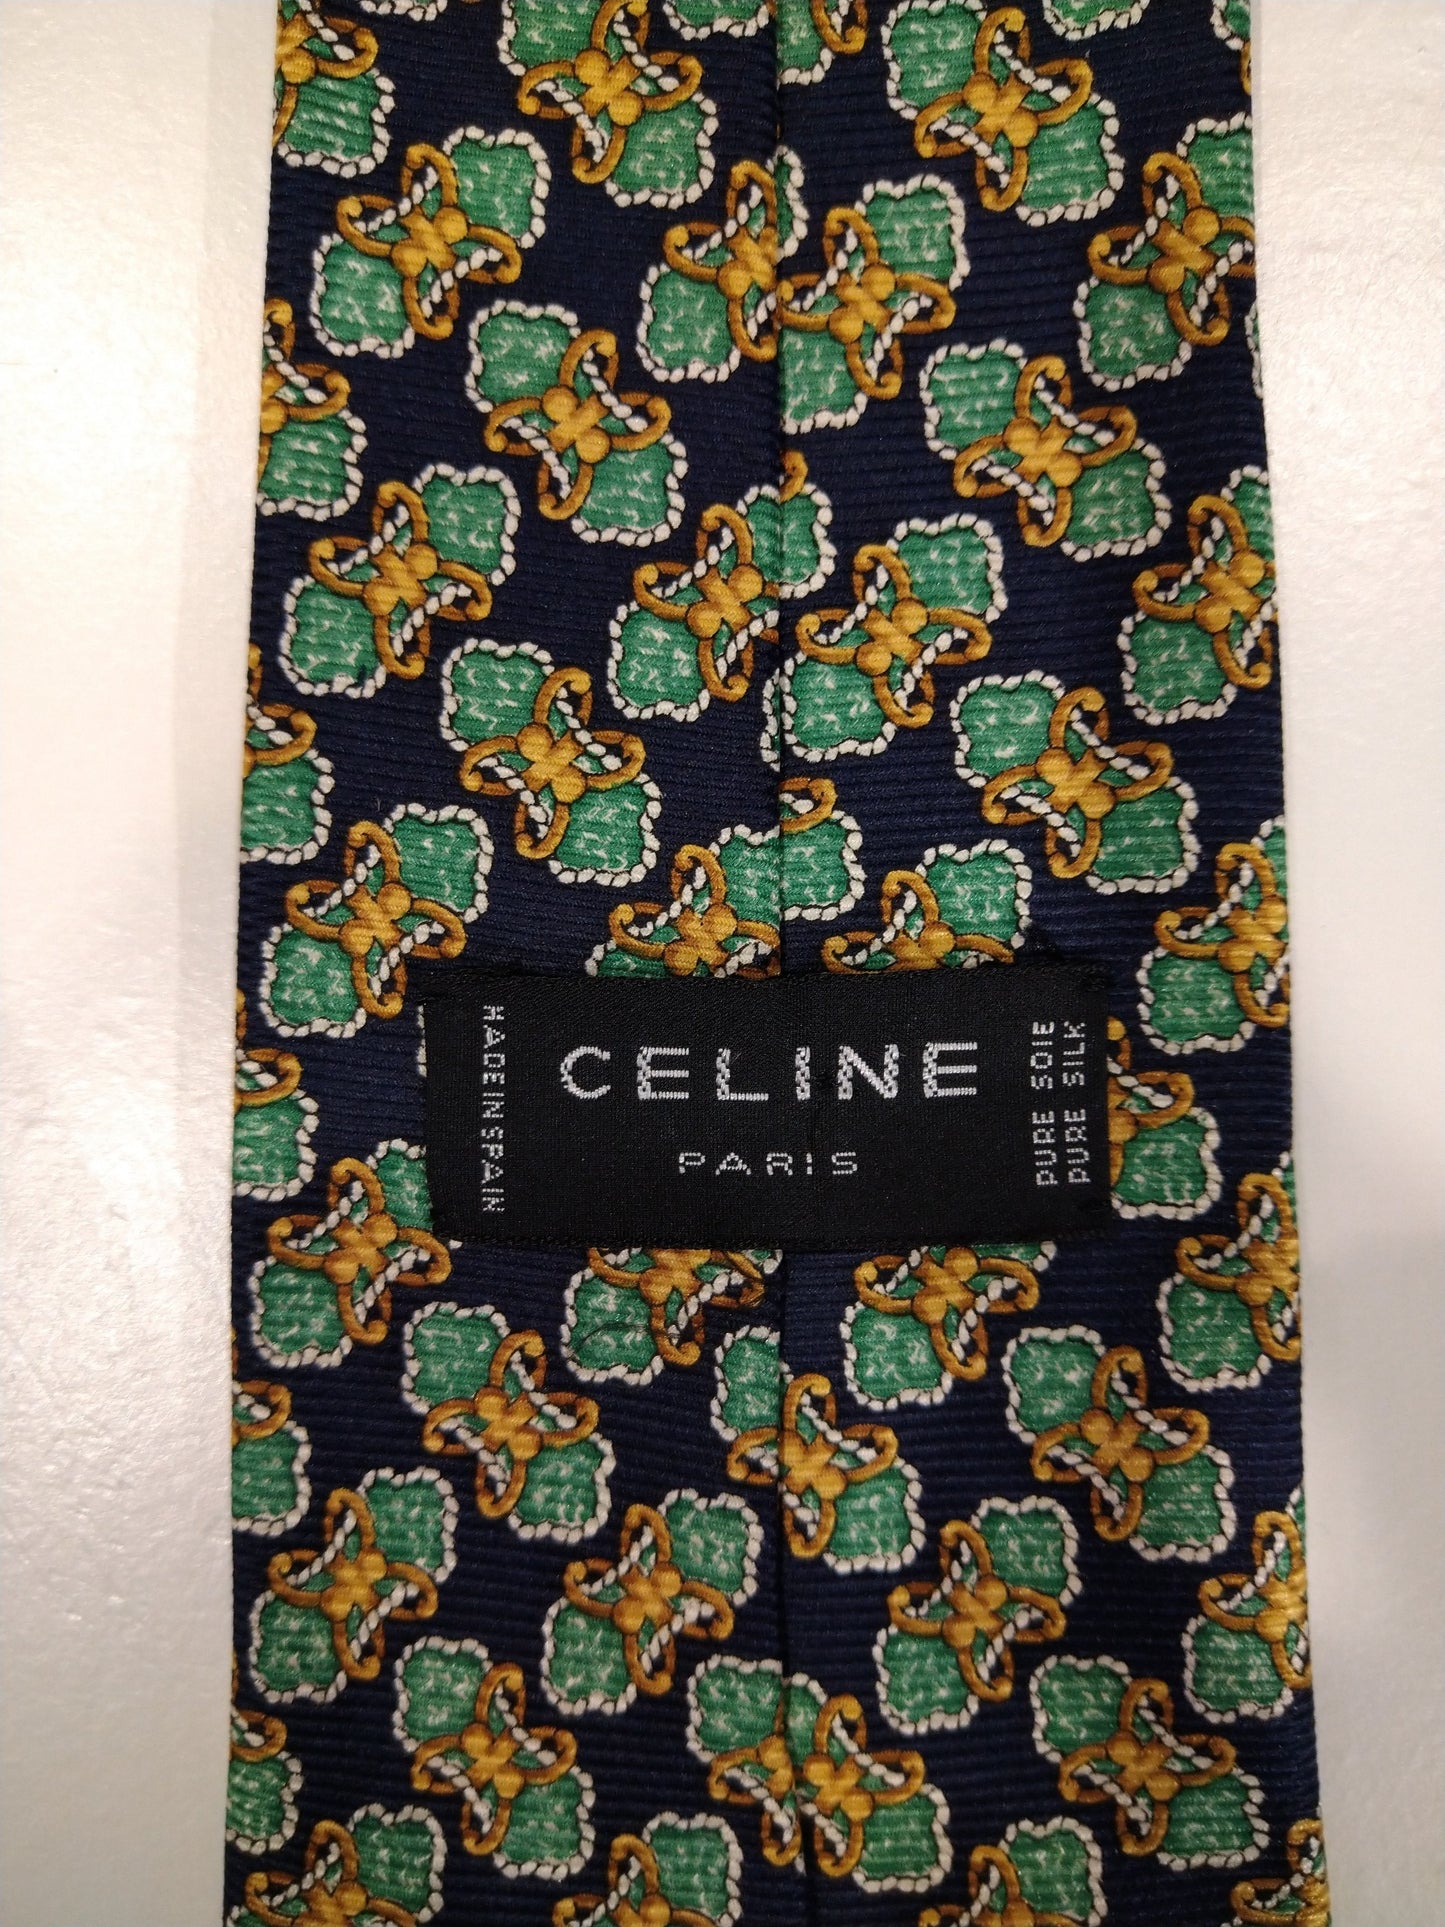 Celine Paris Silk Tie. Motif amarillo azul verde.